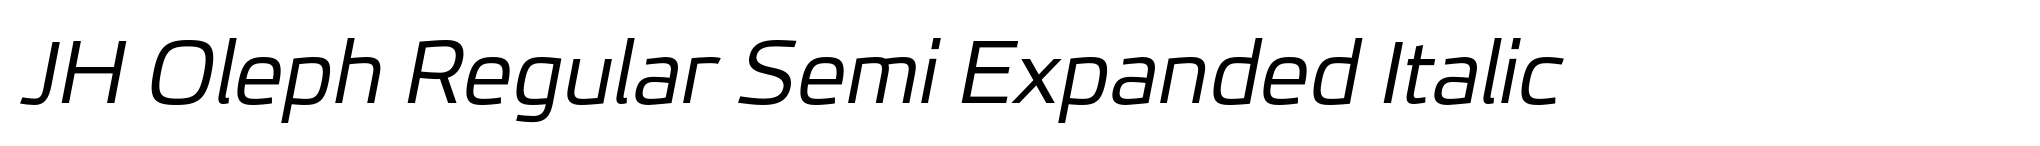 JH Oleph Regular Semi Expanded Italic image